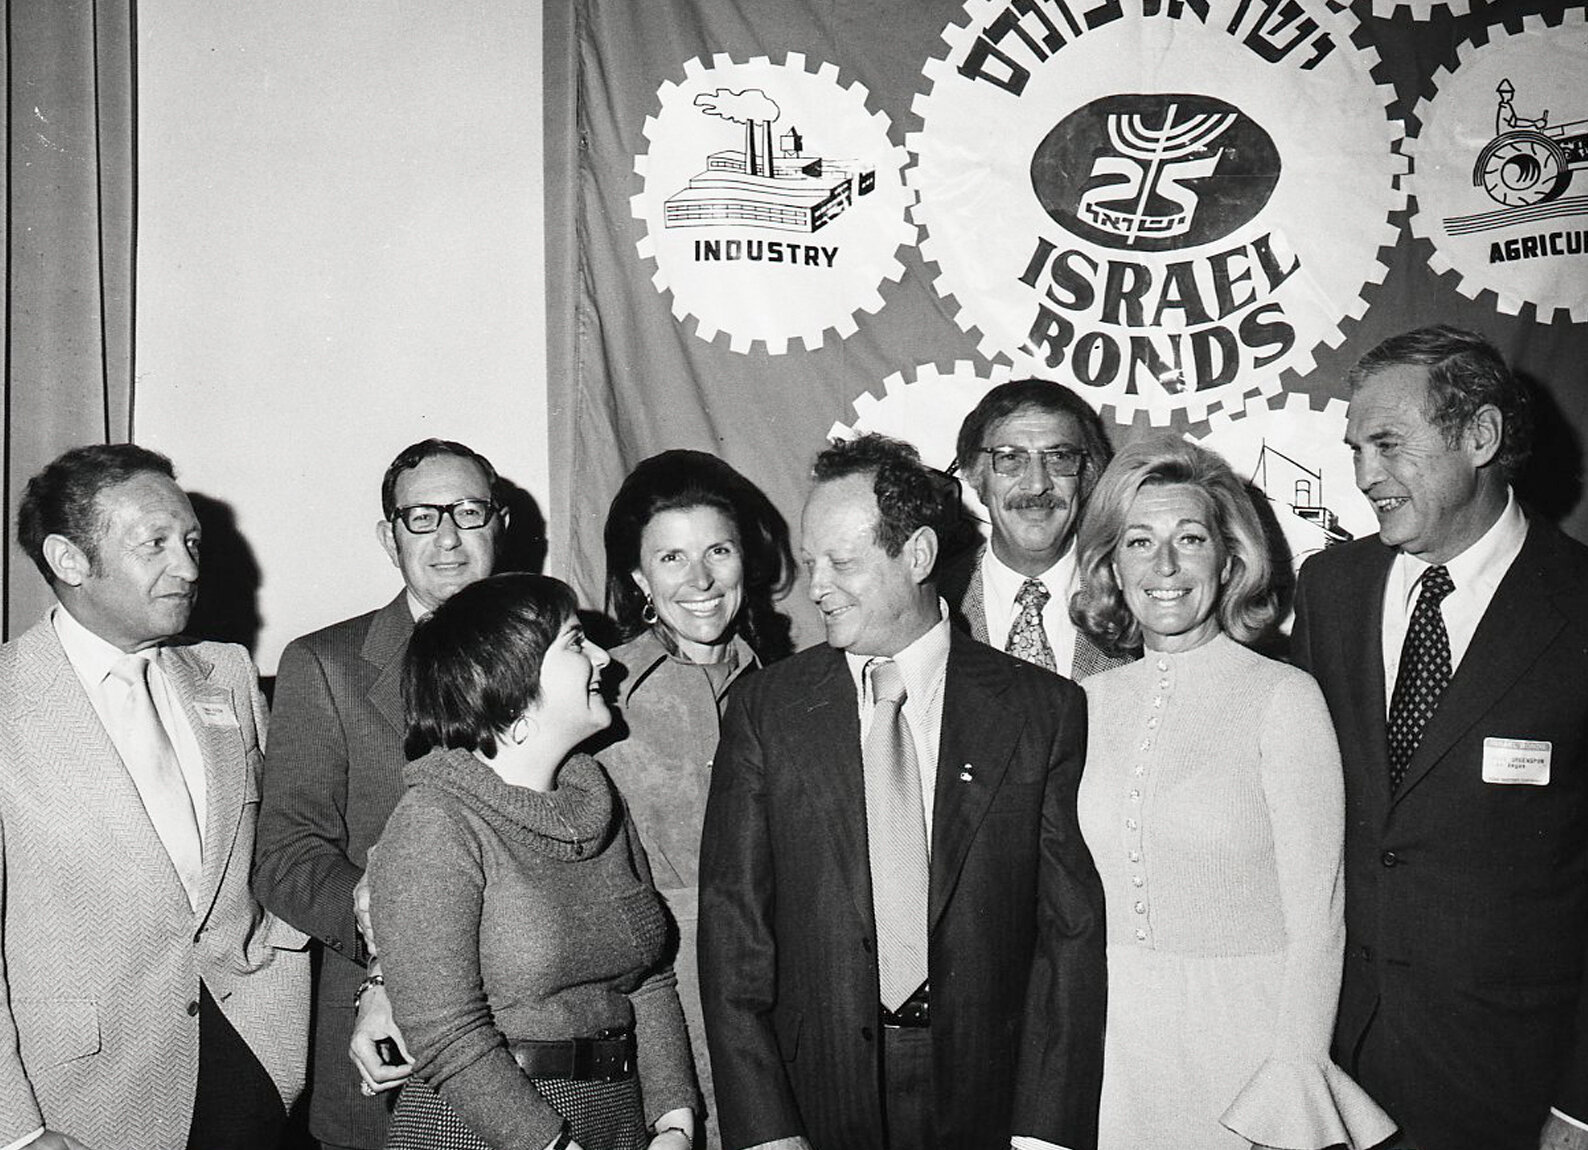 Israel Bonds Meeting on February 12, 1973.